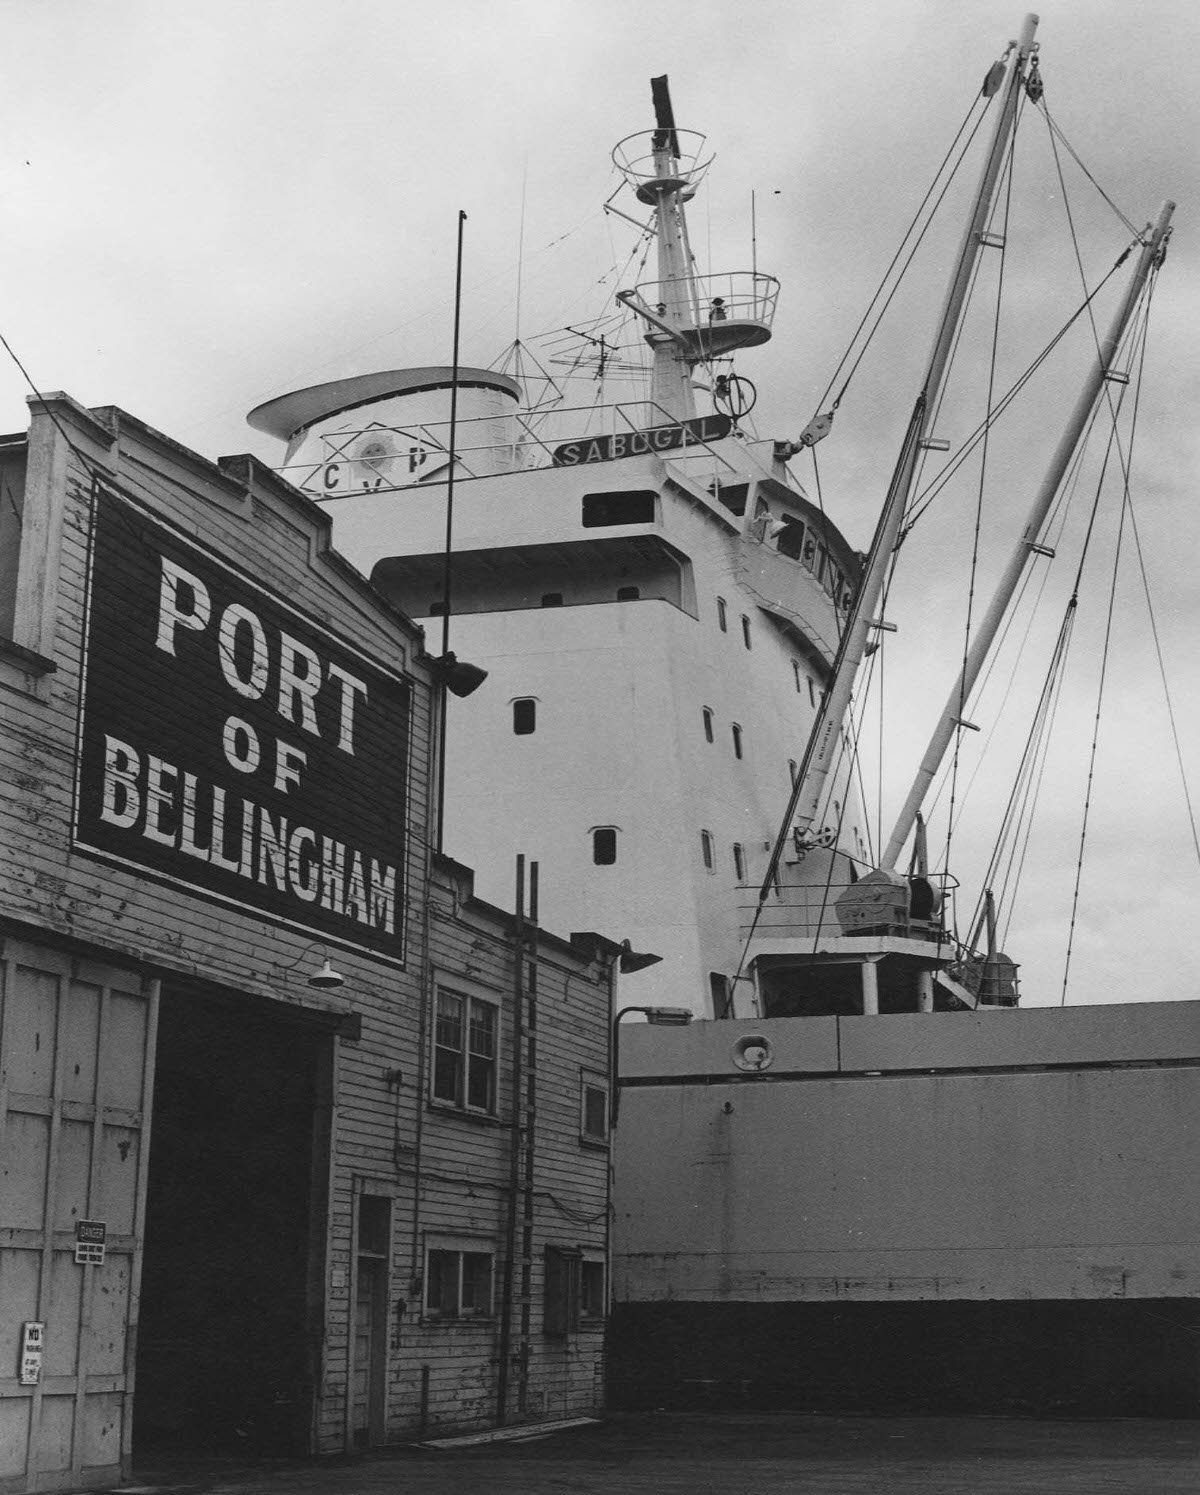 Port of Bellingham offices, 1951